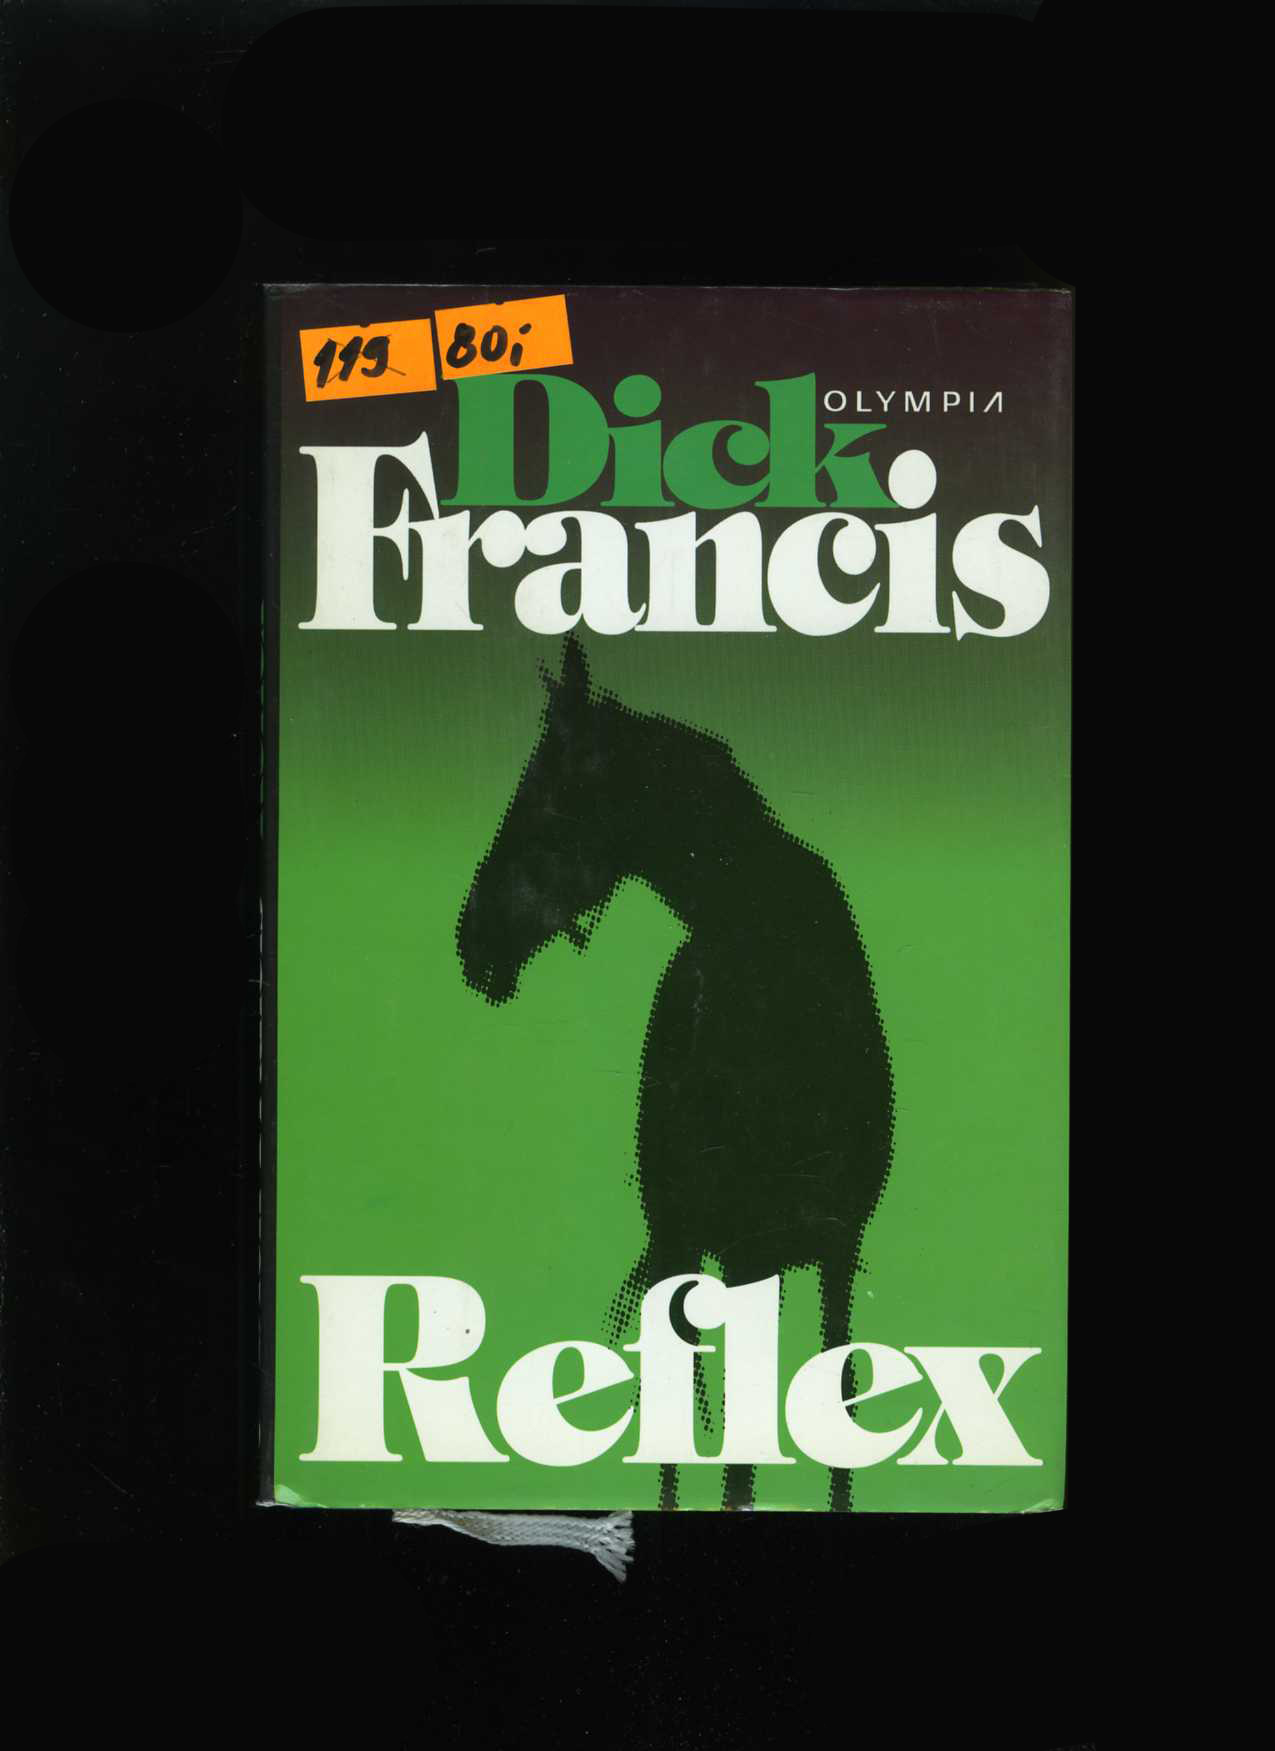 Reflex (Dick Francis)